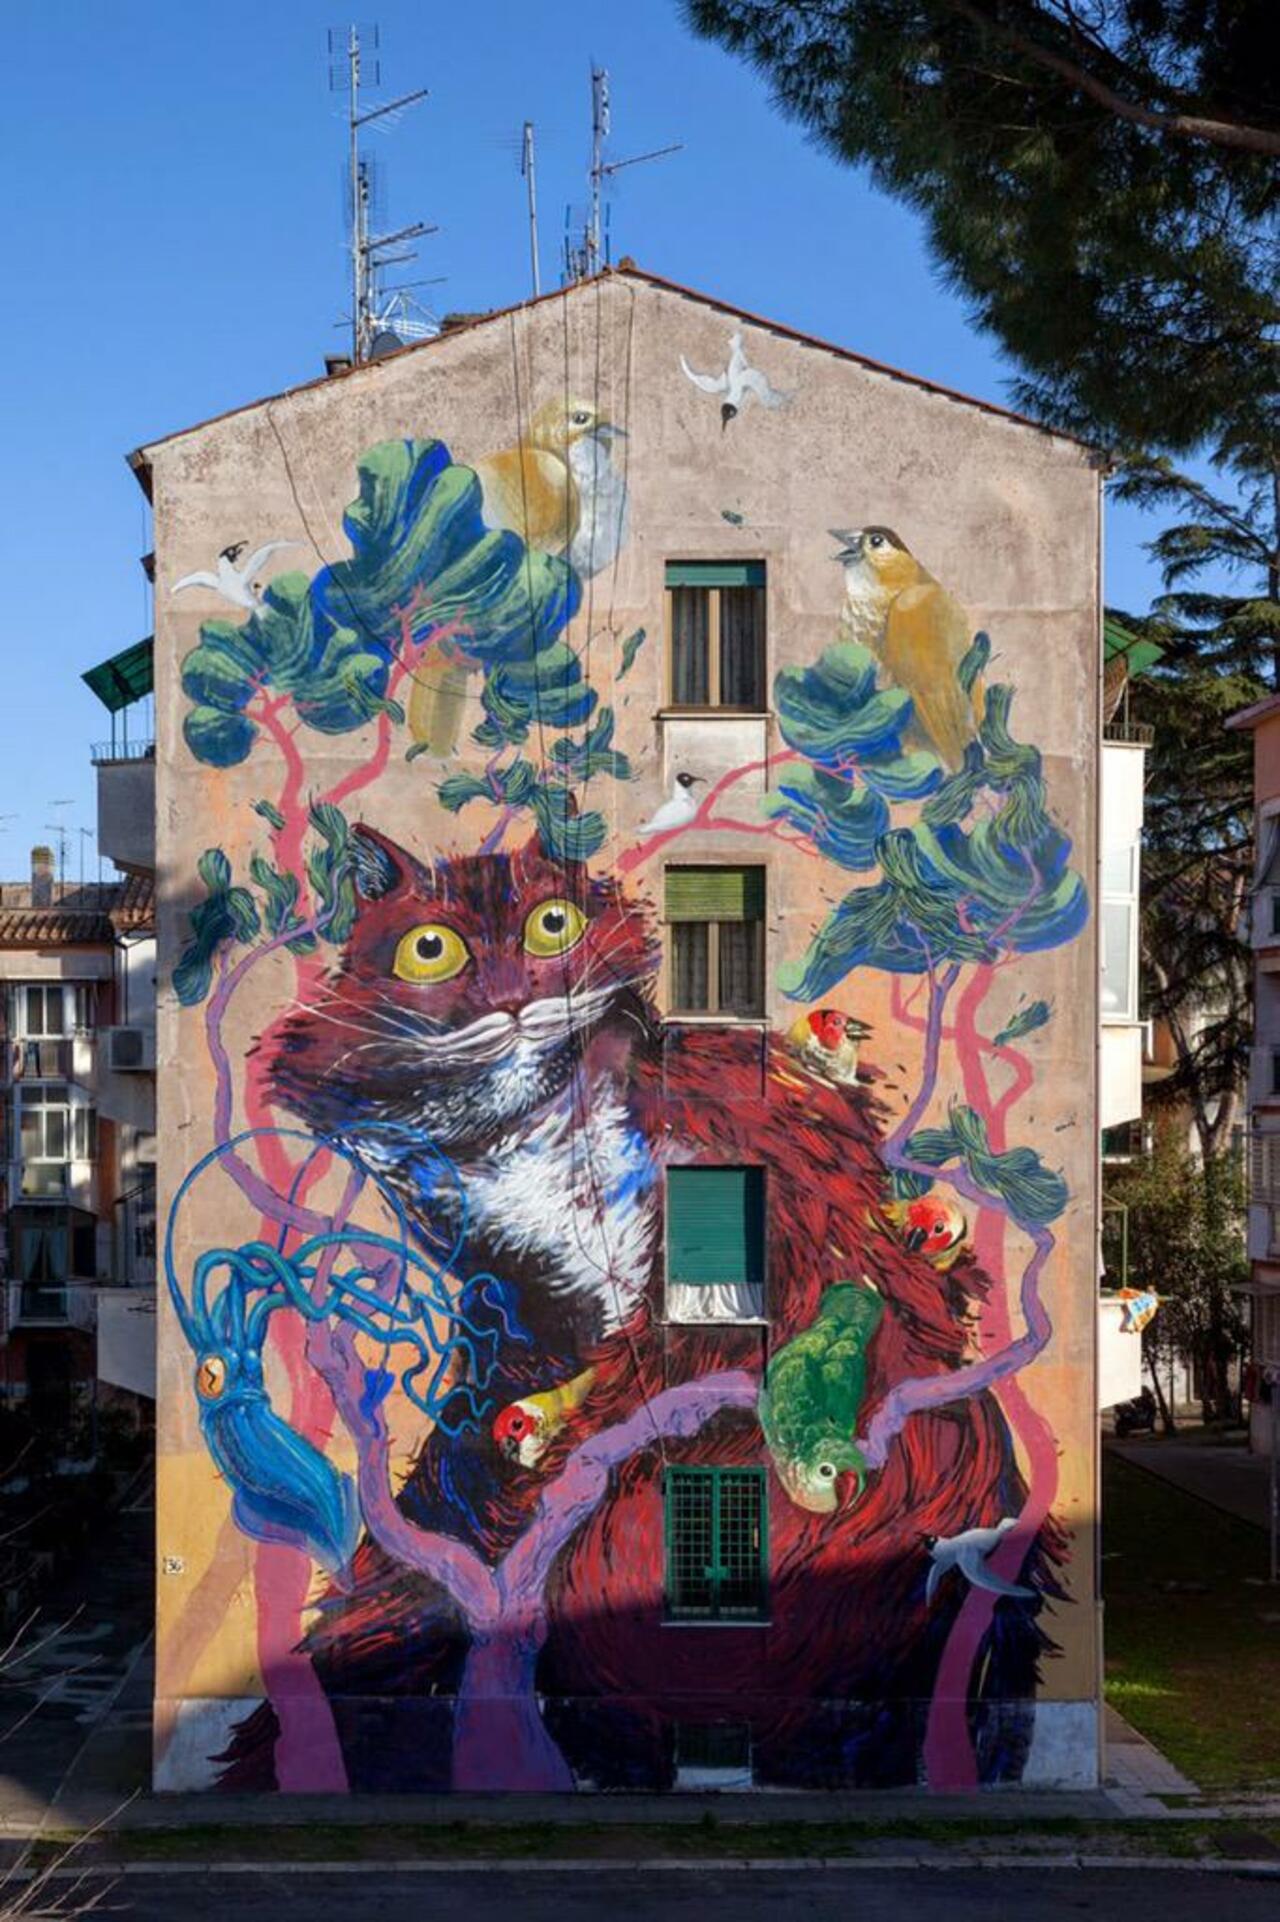 Hitnes
Rome, Italy
#streetart #art #mural #graffiti http://t.co/ZFqeNVOxaR